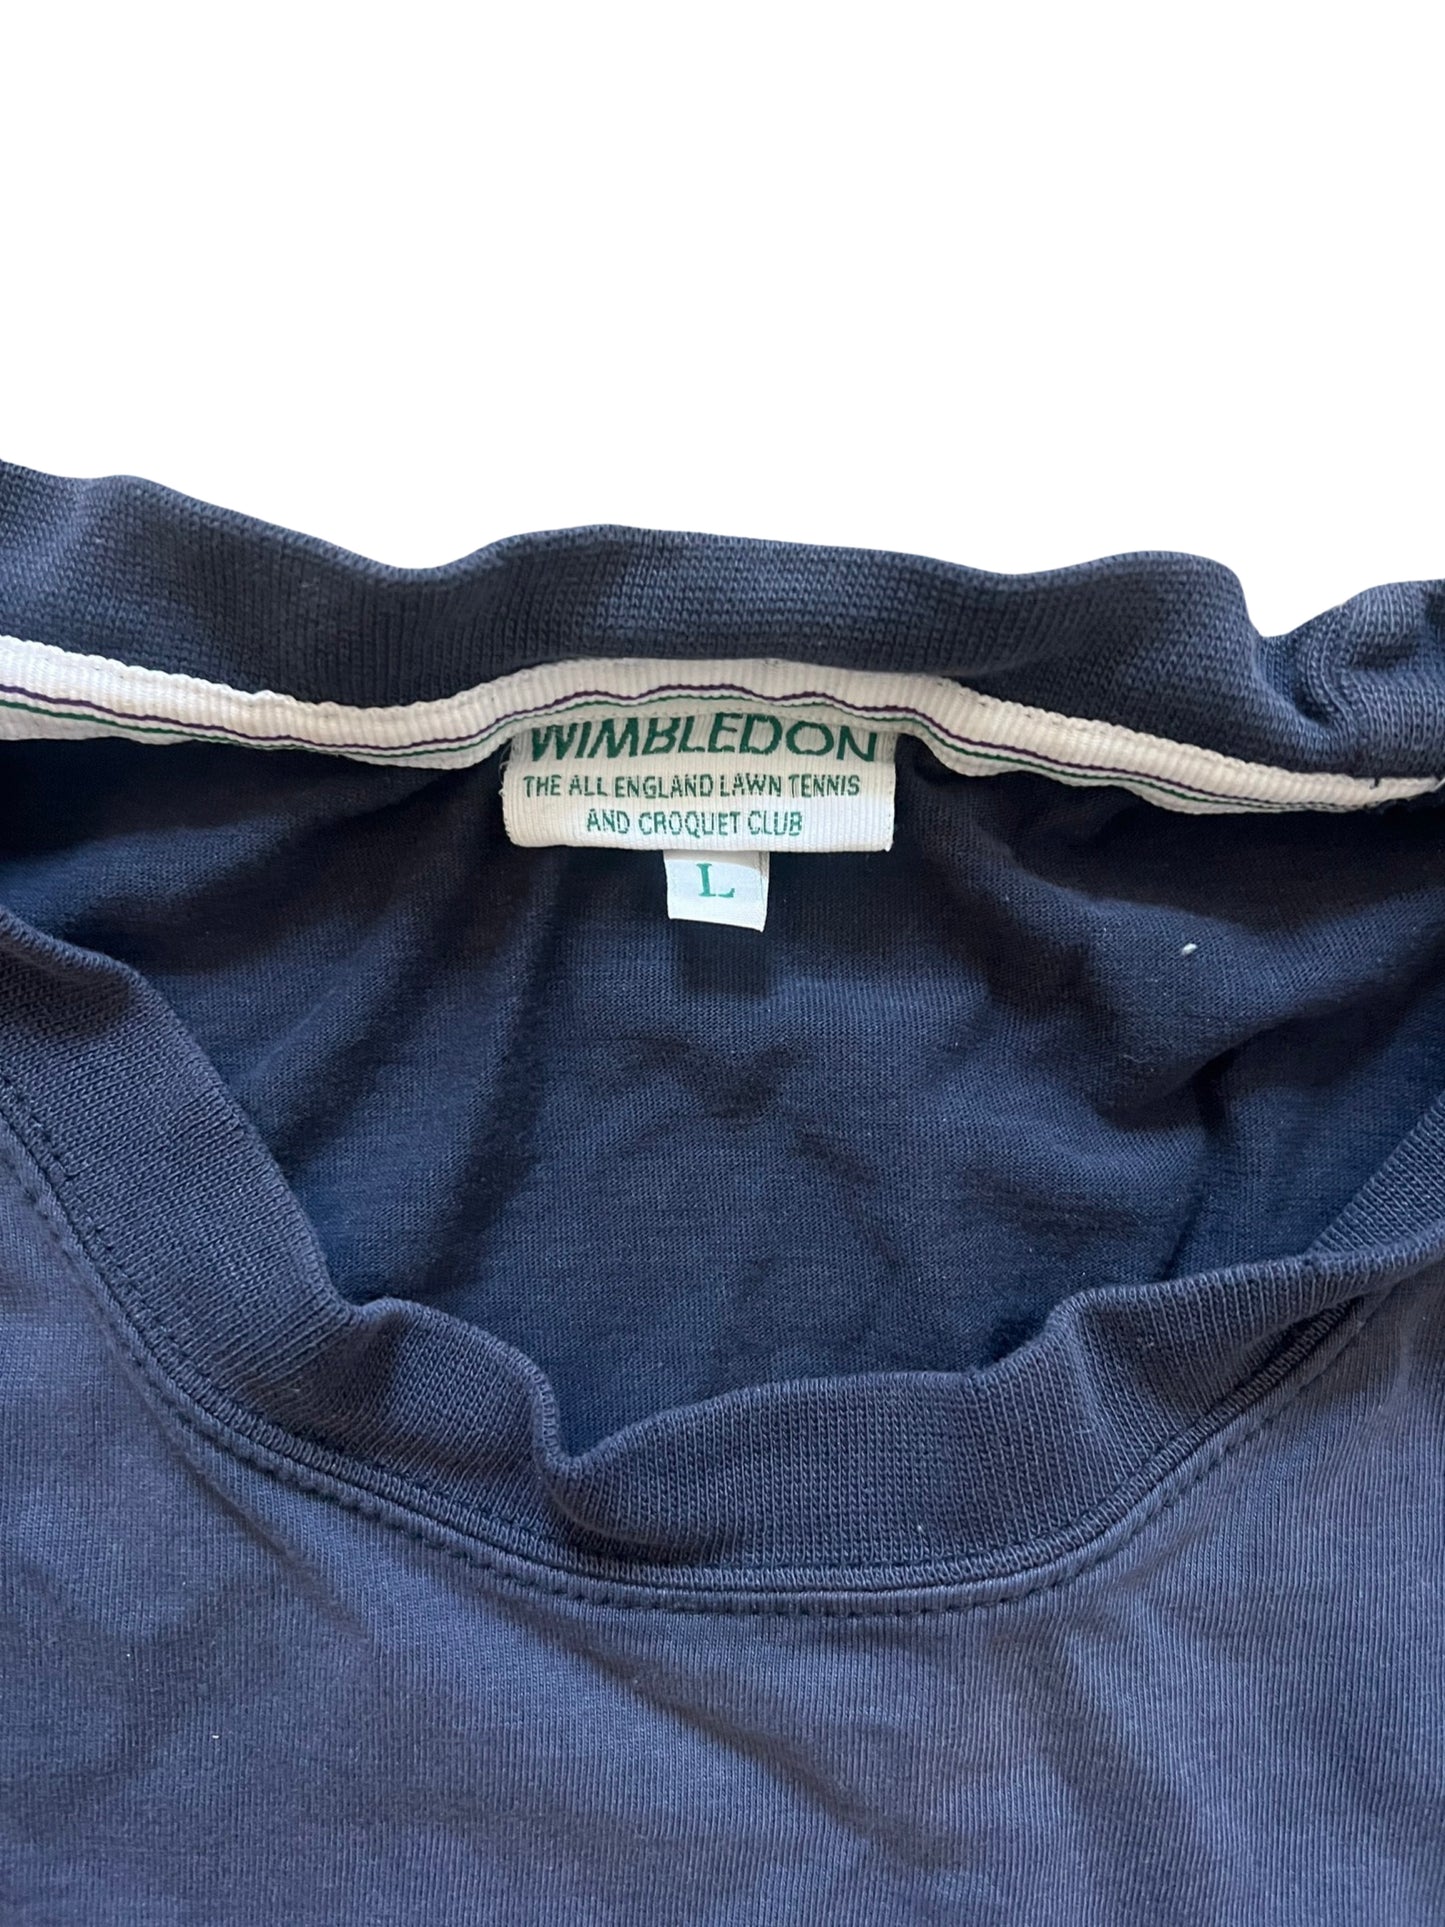 Vintage Wimbledon T-Shirt (2007)